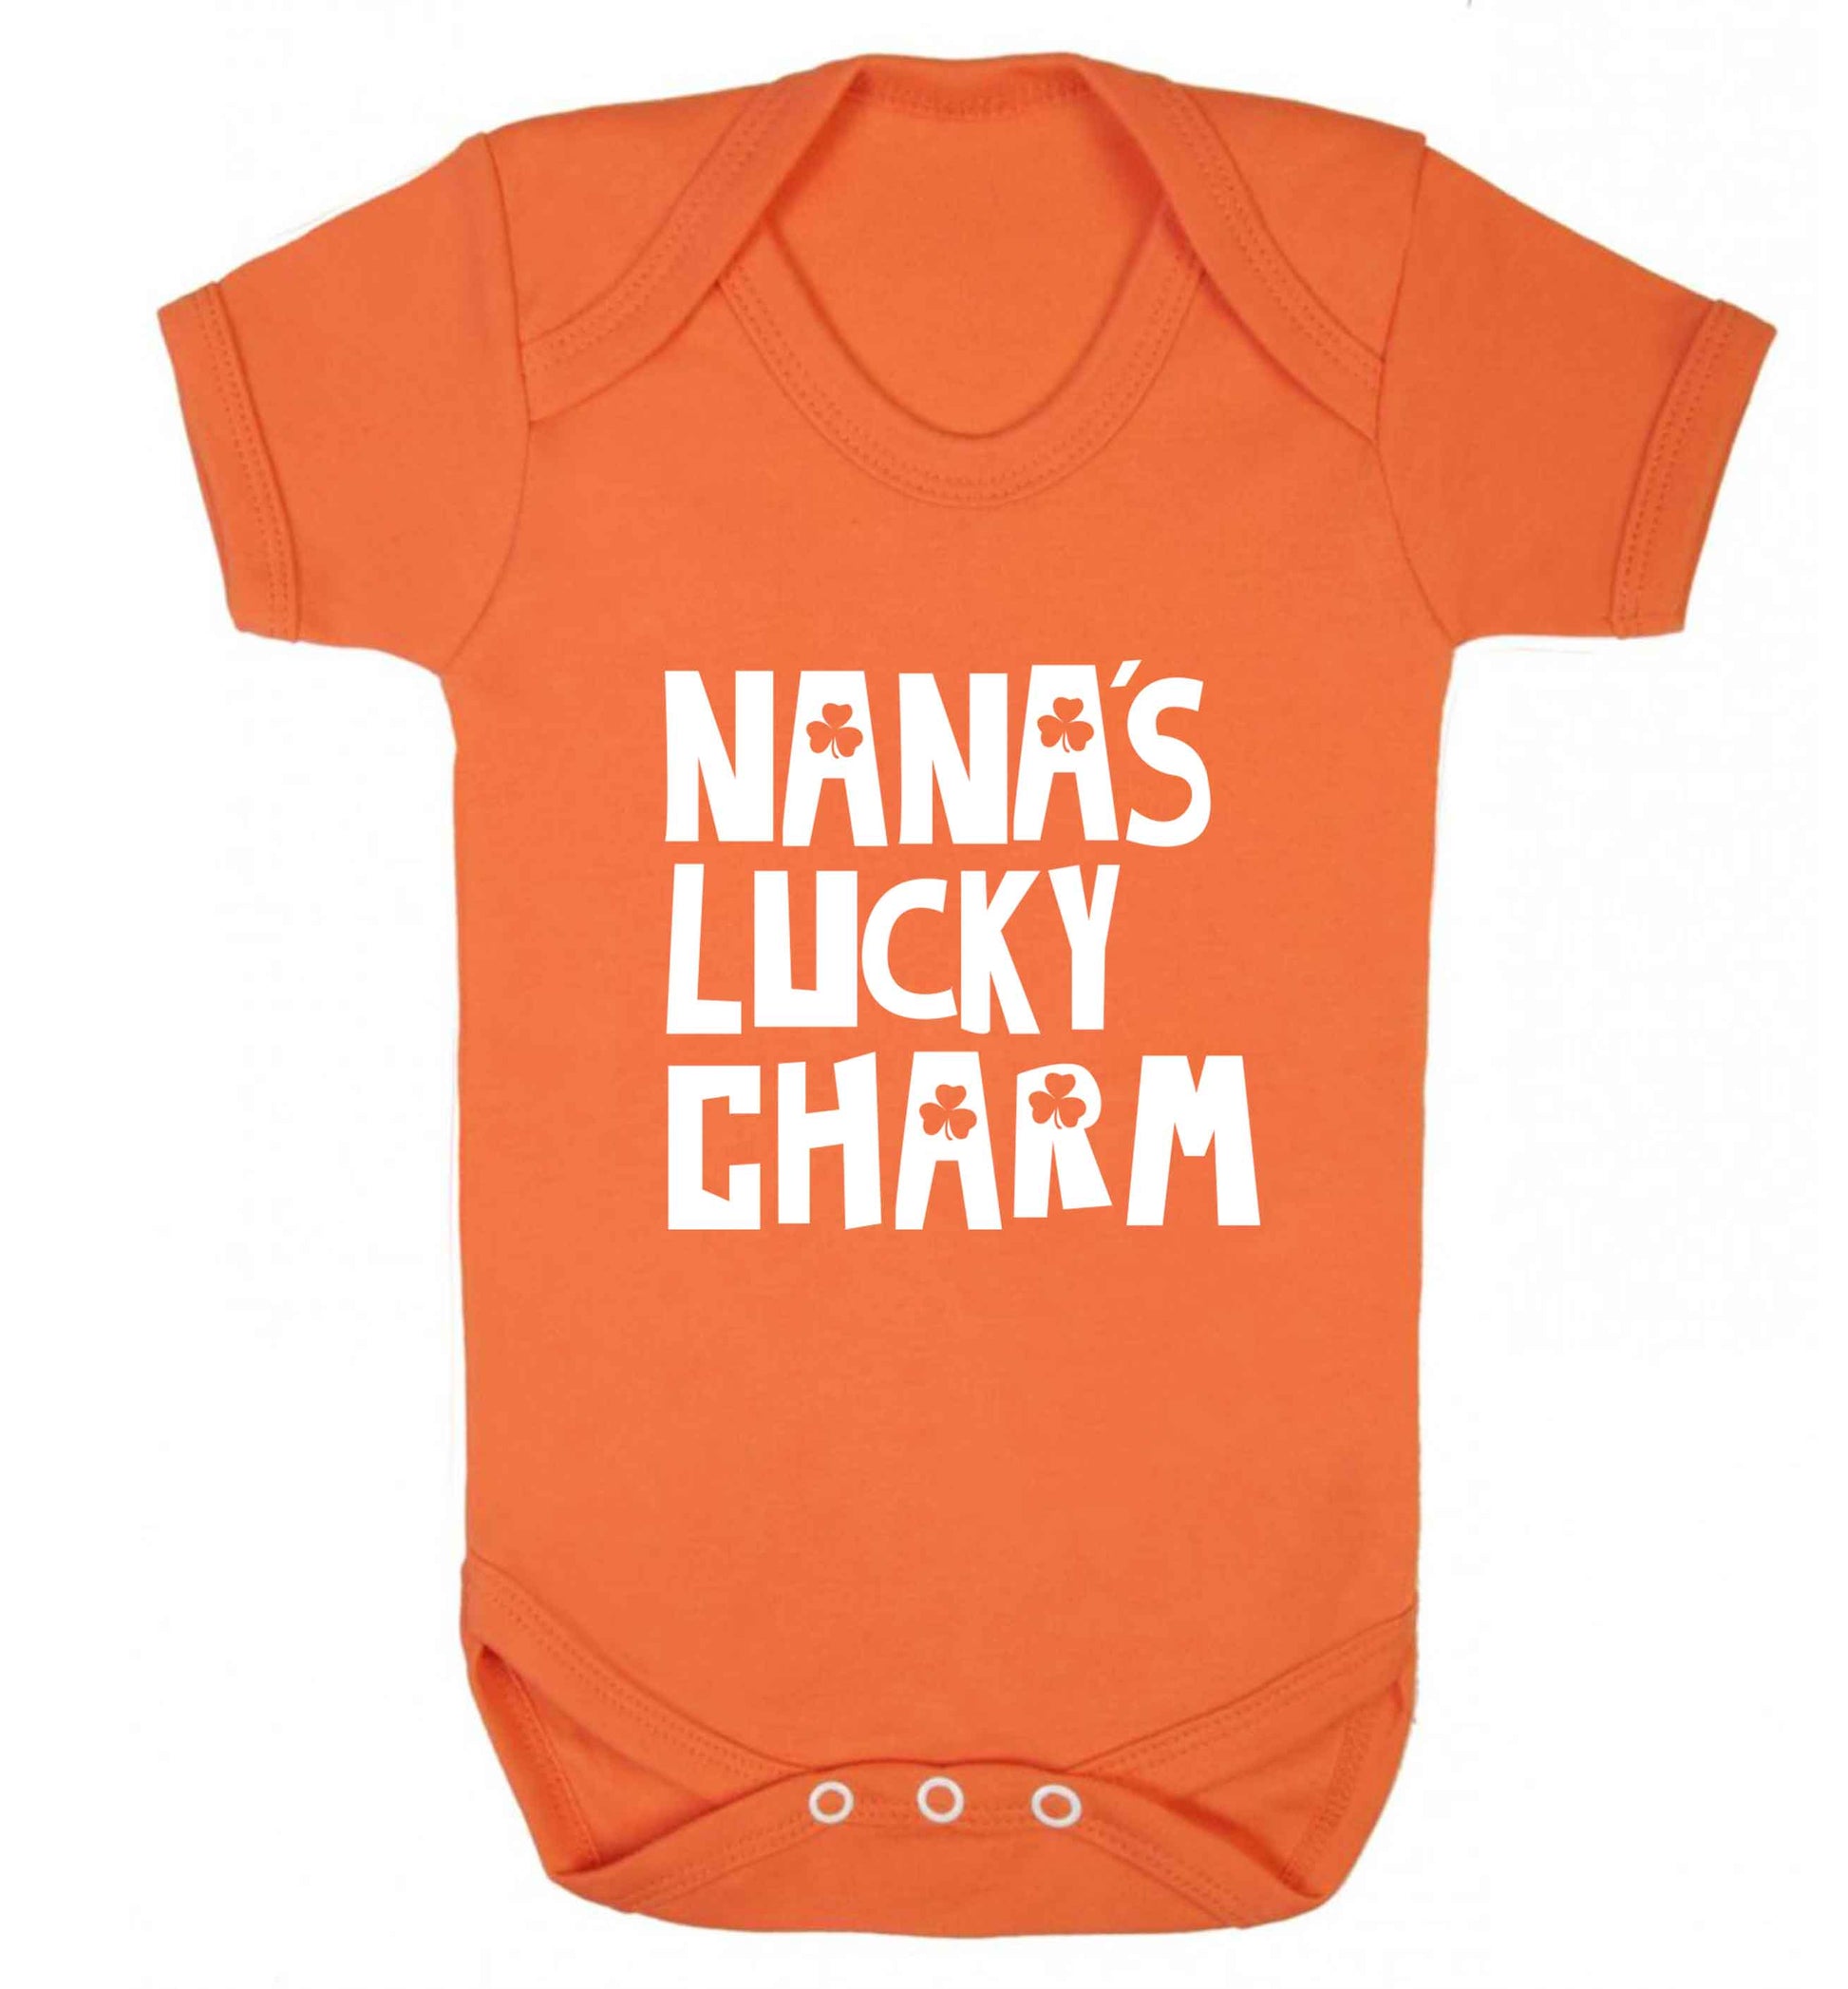 Nana's lucky charm baby vest orange 18-24 months